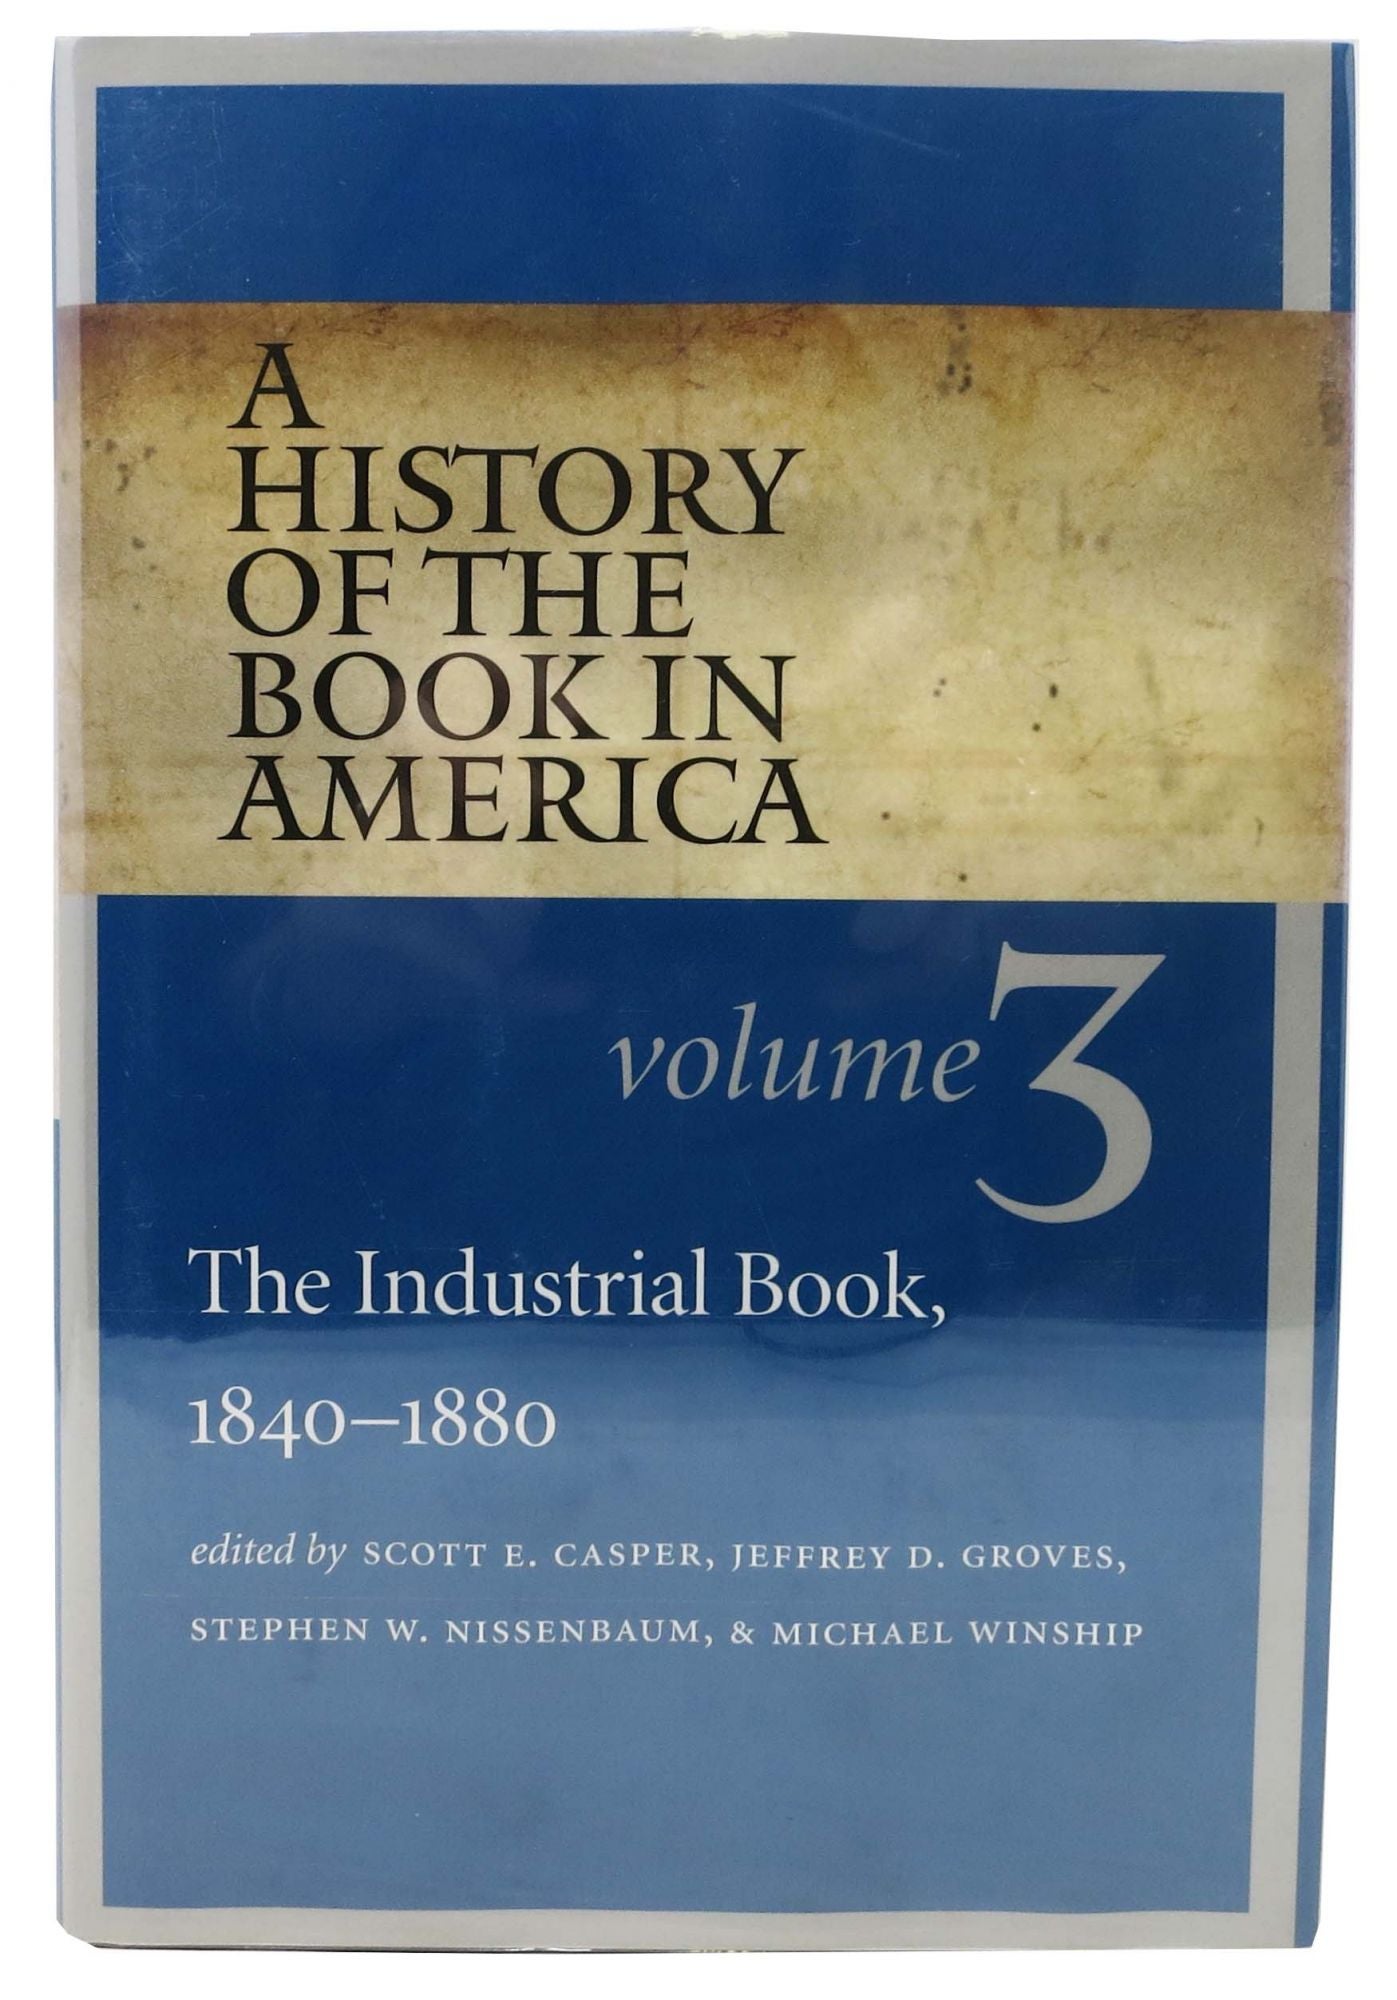 Casper, Scott E. Groves, Jeffrey D. Nissenbaum, Stephen W. Winship, Michael - Editors - A HISTORY Of The BOOK In AMERICA. The Industrial Book, 1840 - 1880. Volume 3